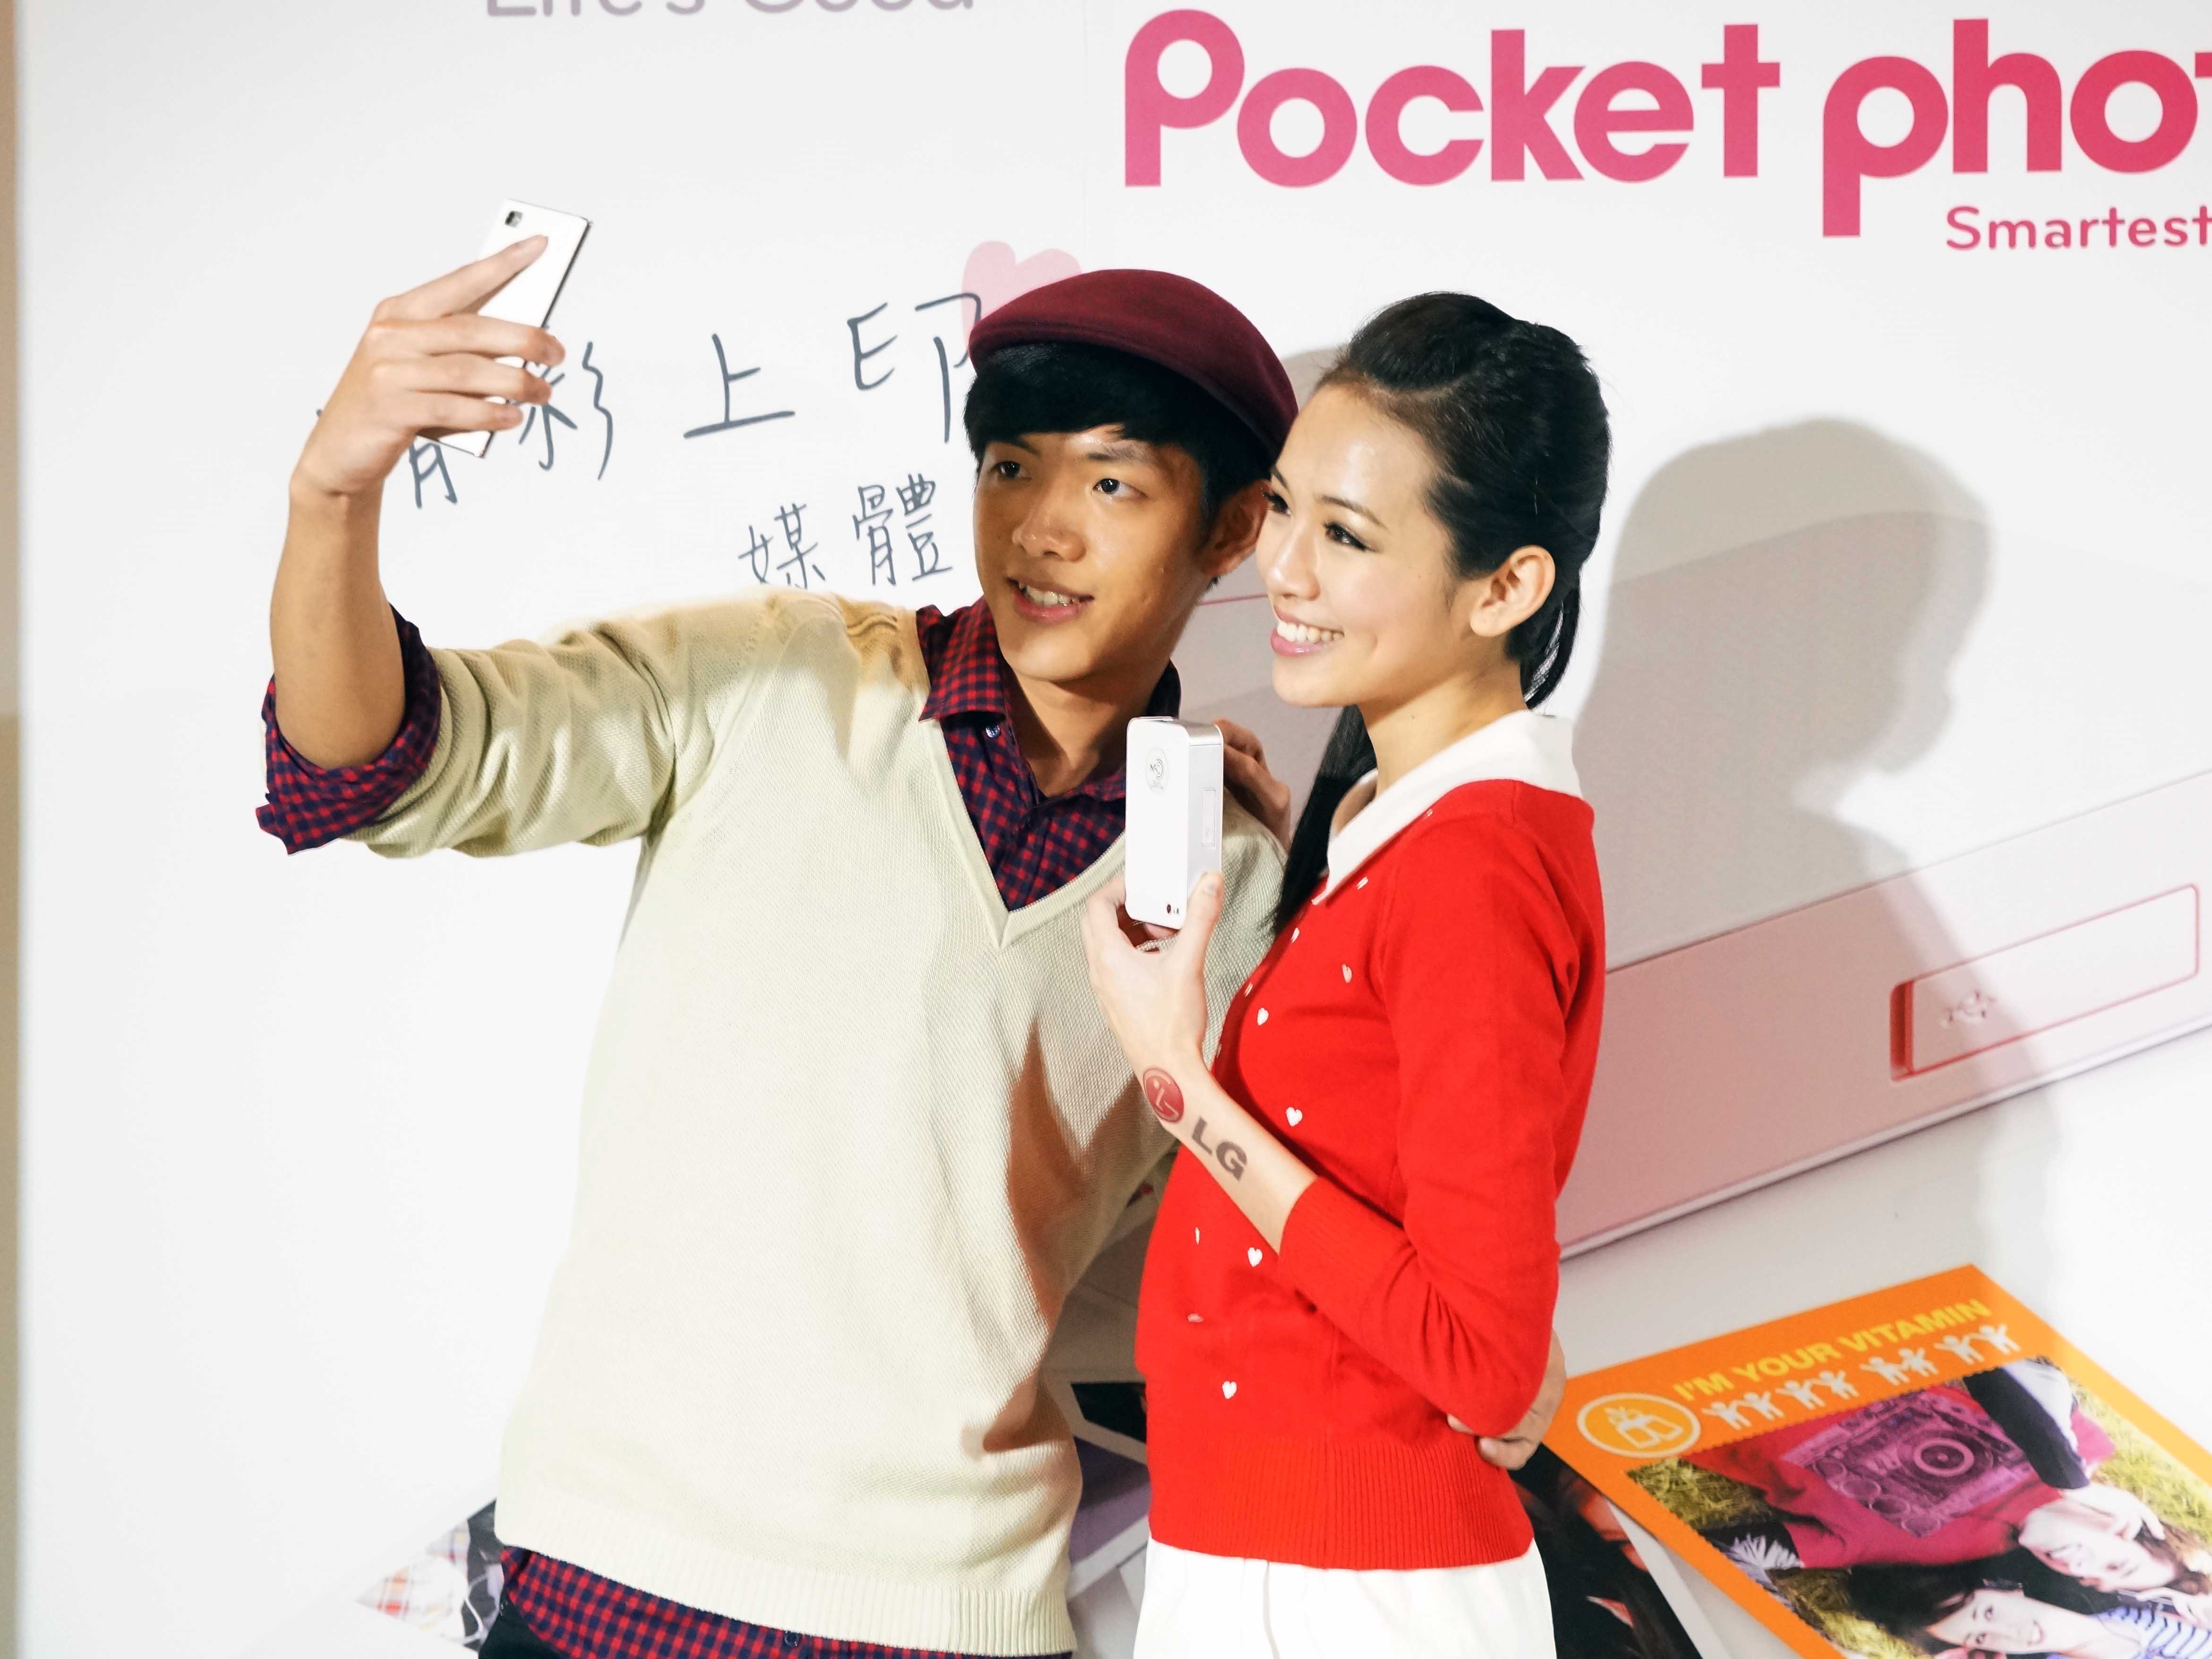 LG 發表手機專用口袋列印機 Pocket Photo，售價 4,990元